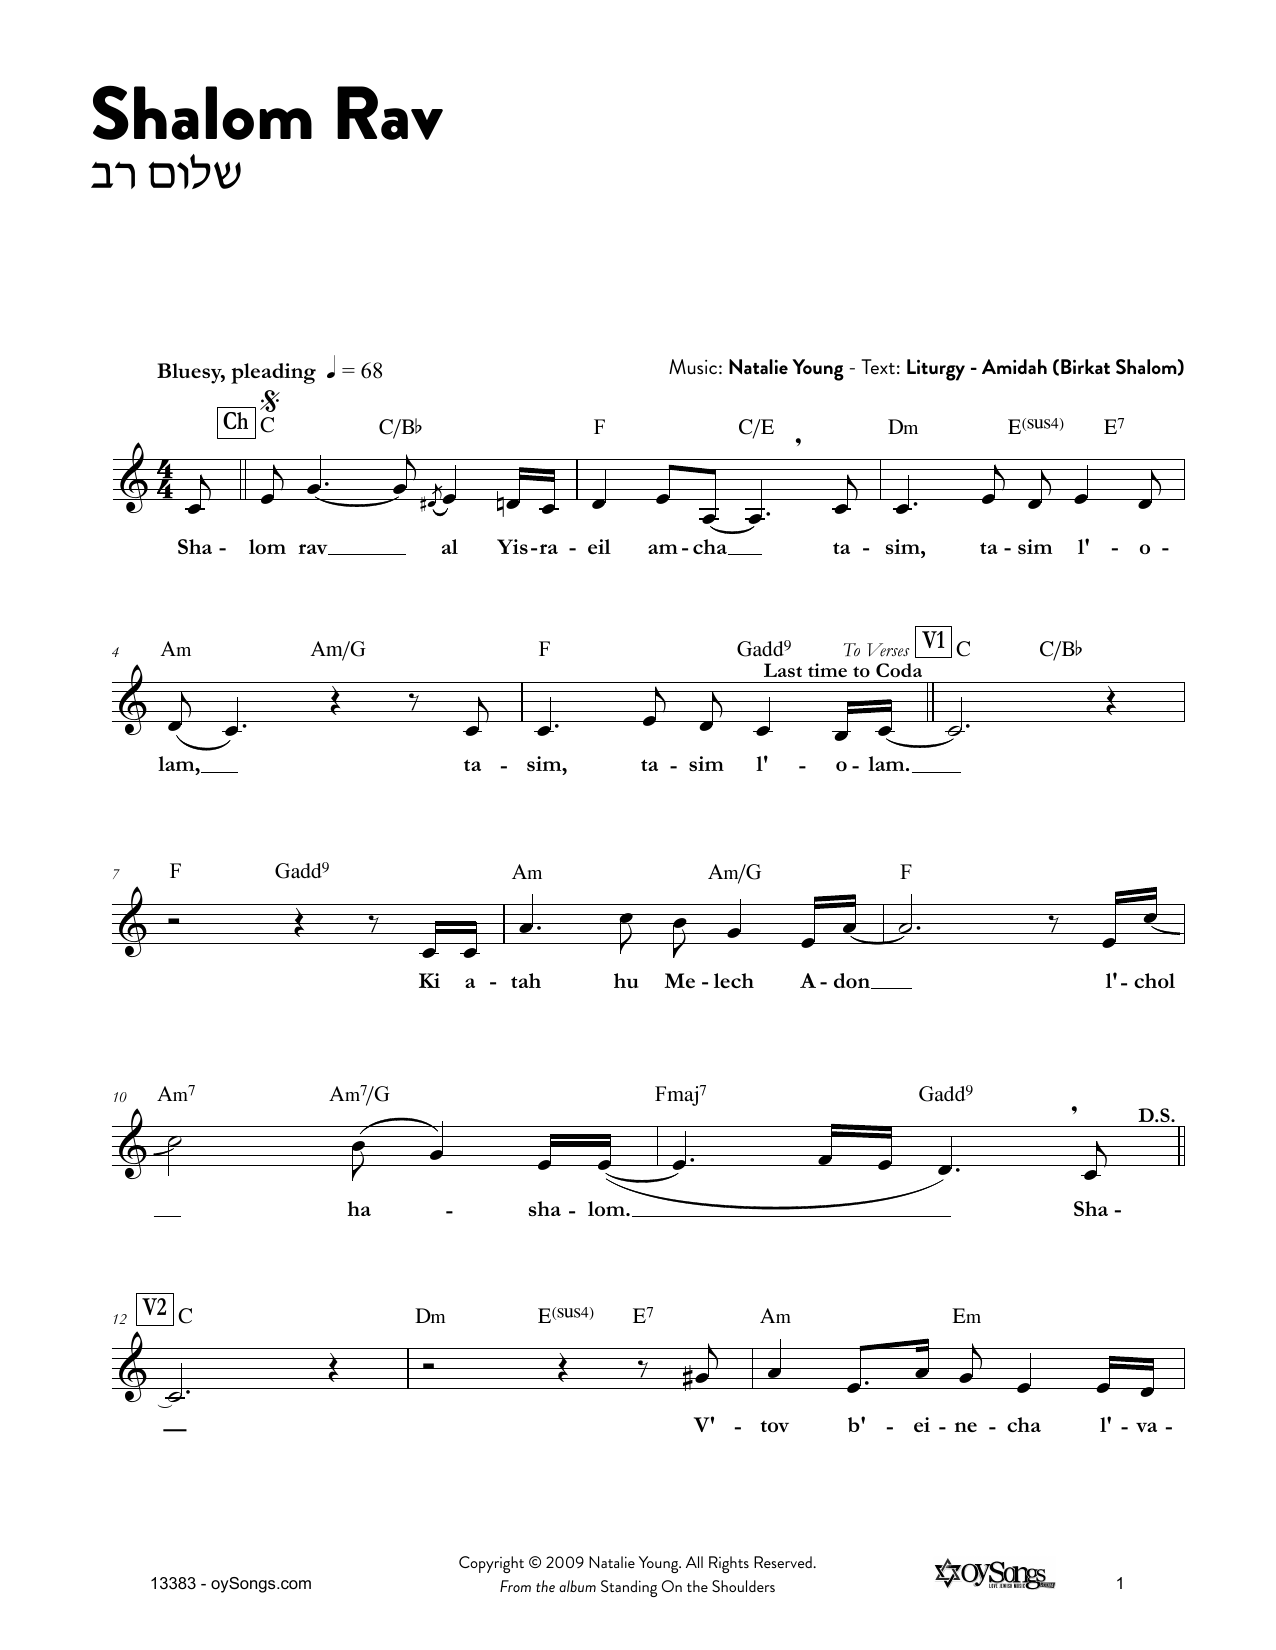 Natalie Young Shalom Rav Sheet Music Notes & Chords for Melody Line, Lyrics & Chords - Download or Print PDF